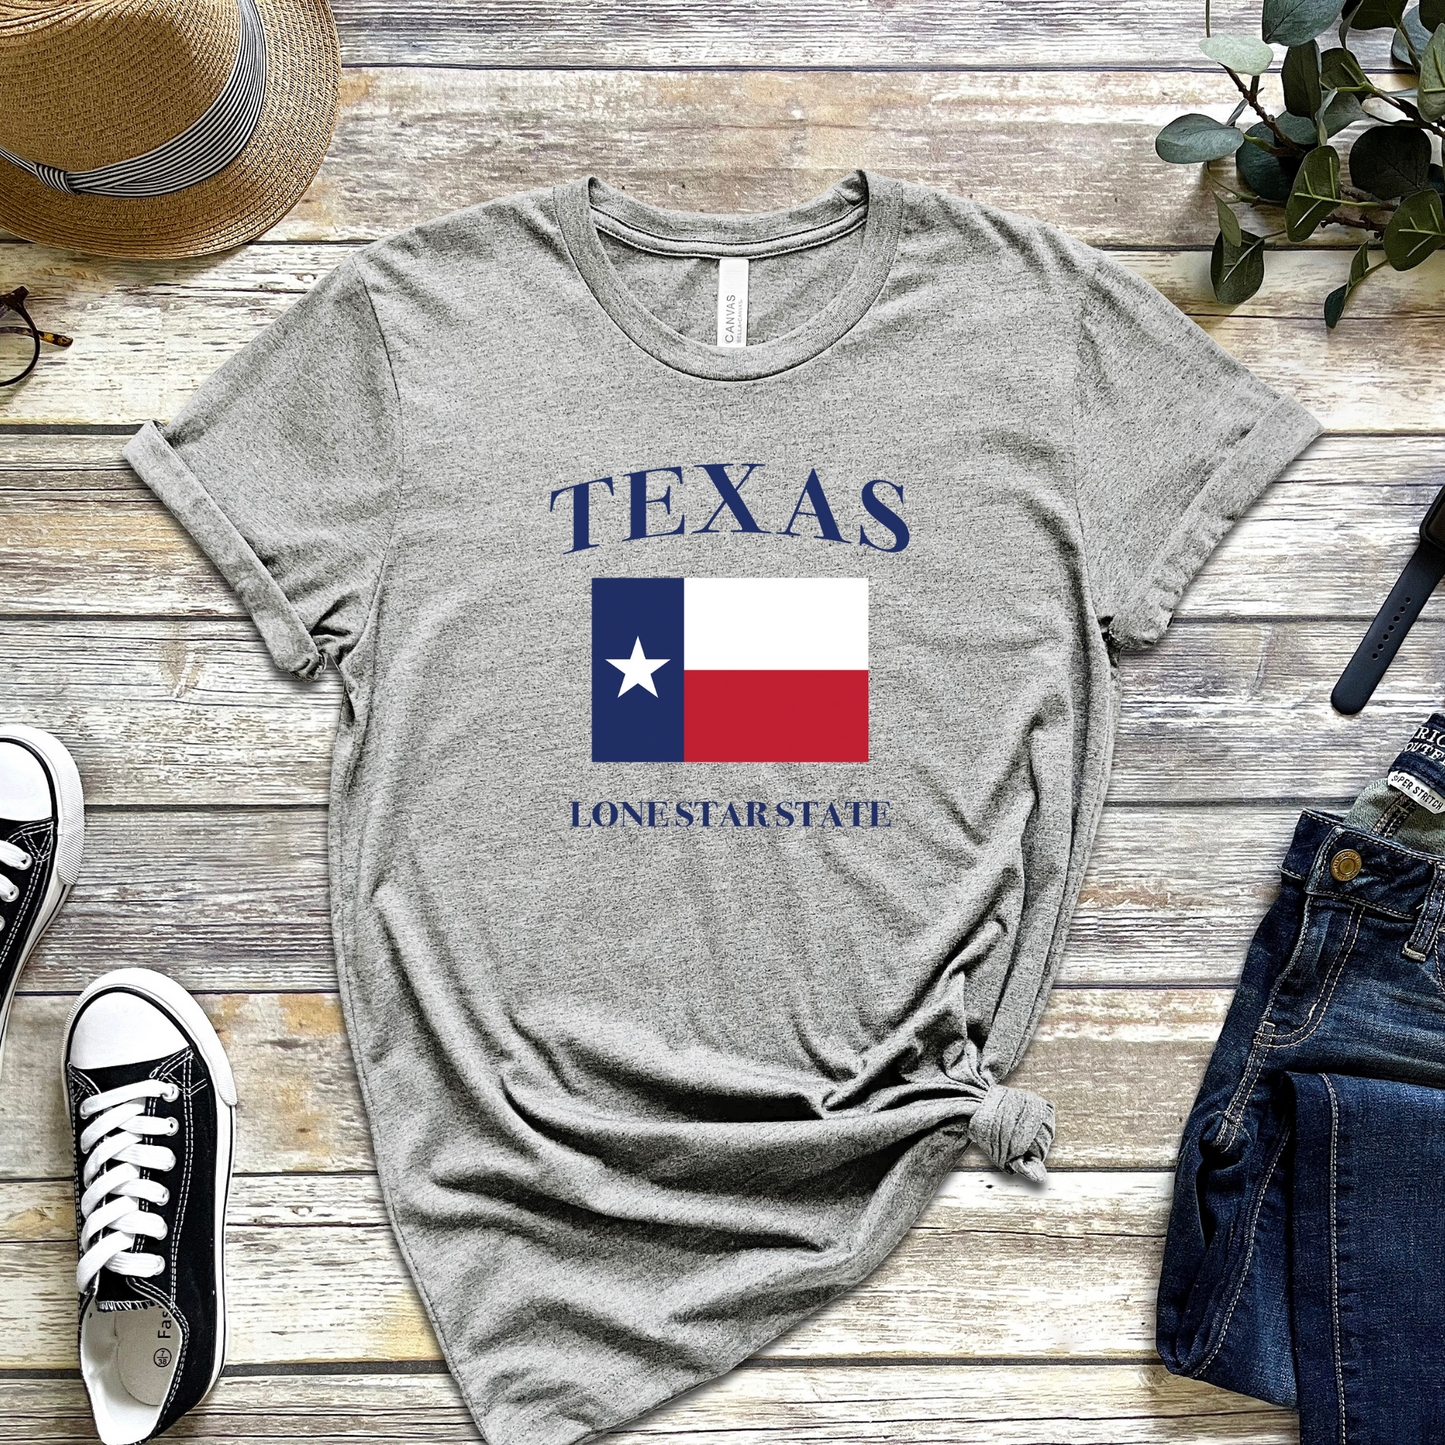 Texas Lone Star State Flag T-Shirt | Patriotic Texan Apparel | Unique Lone Star Design